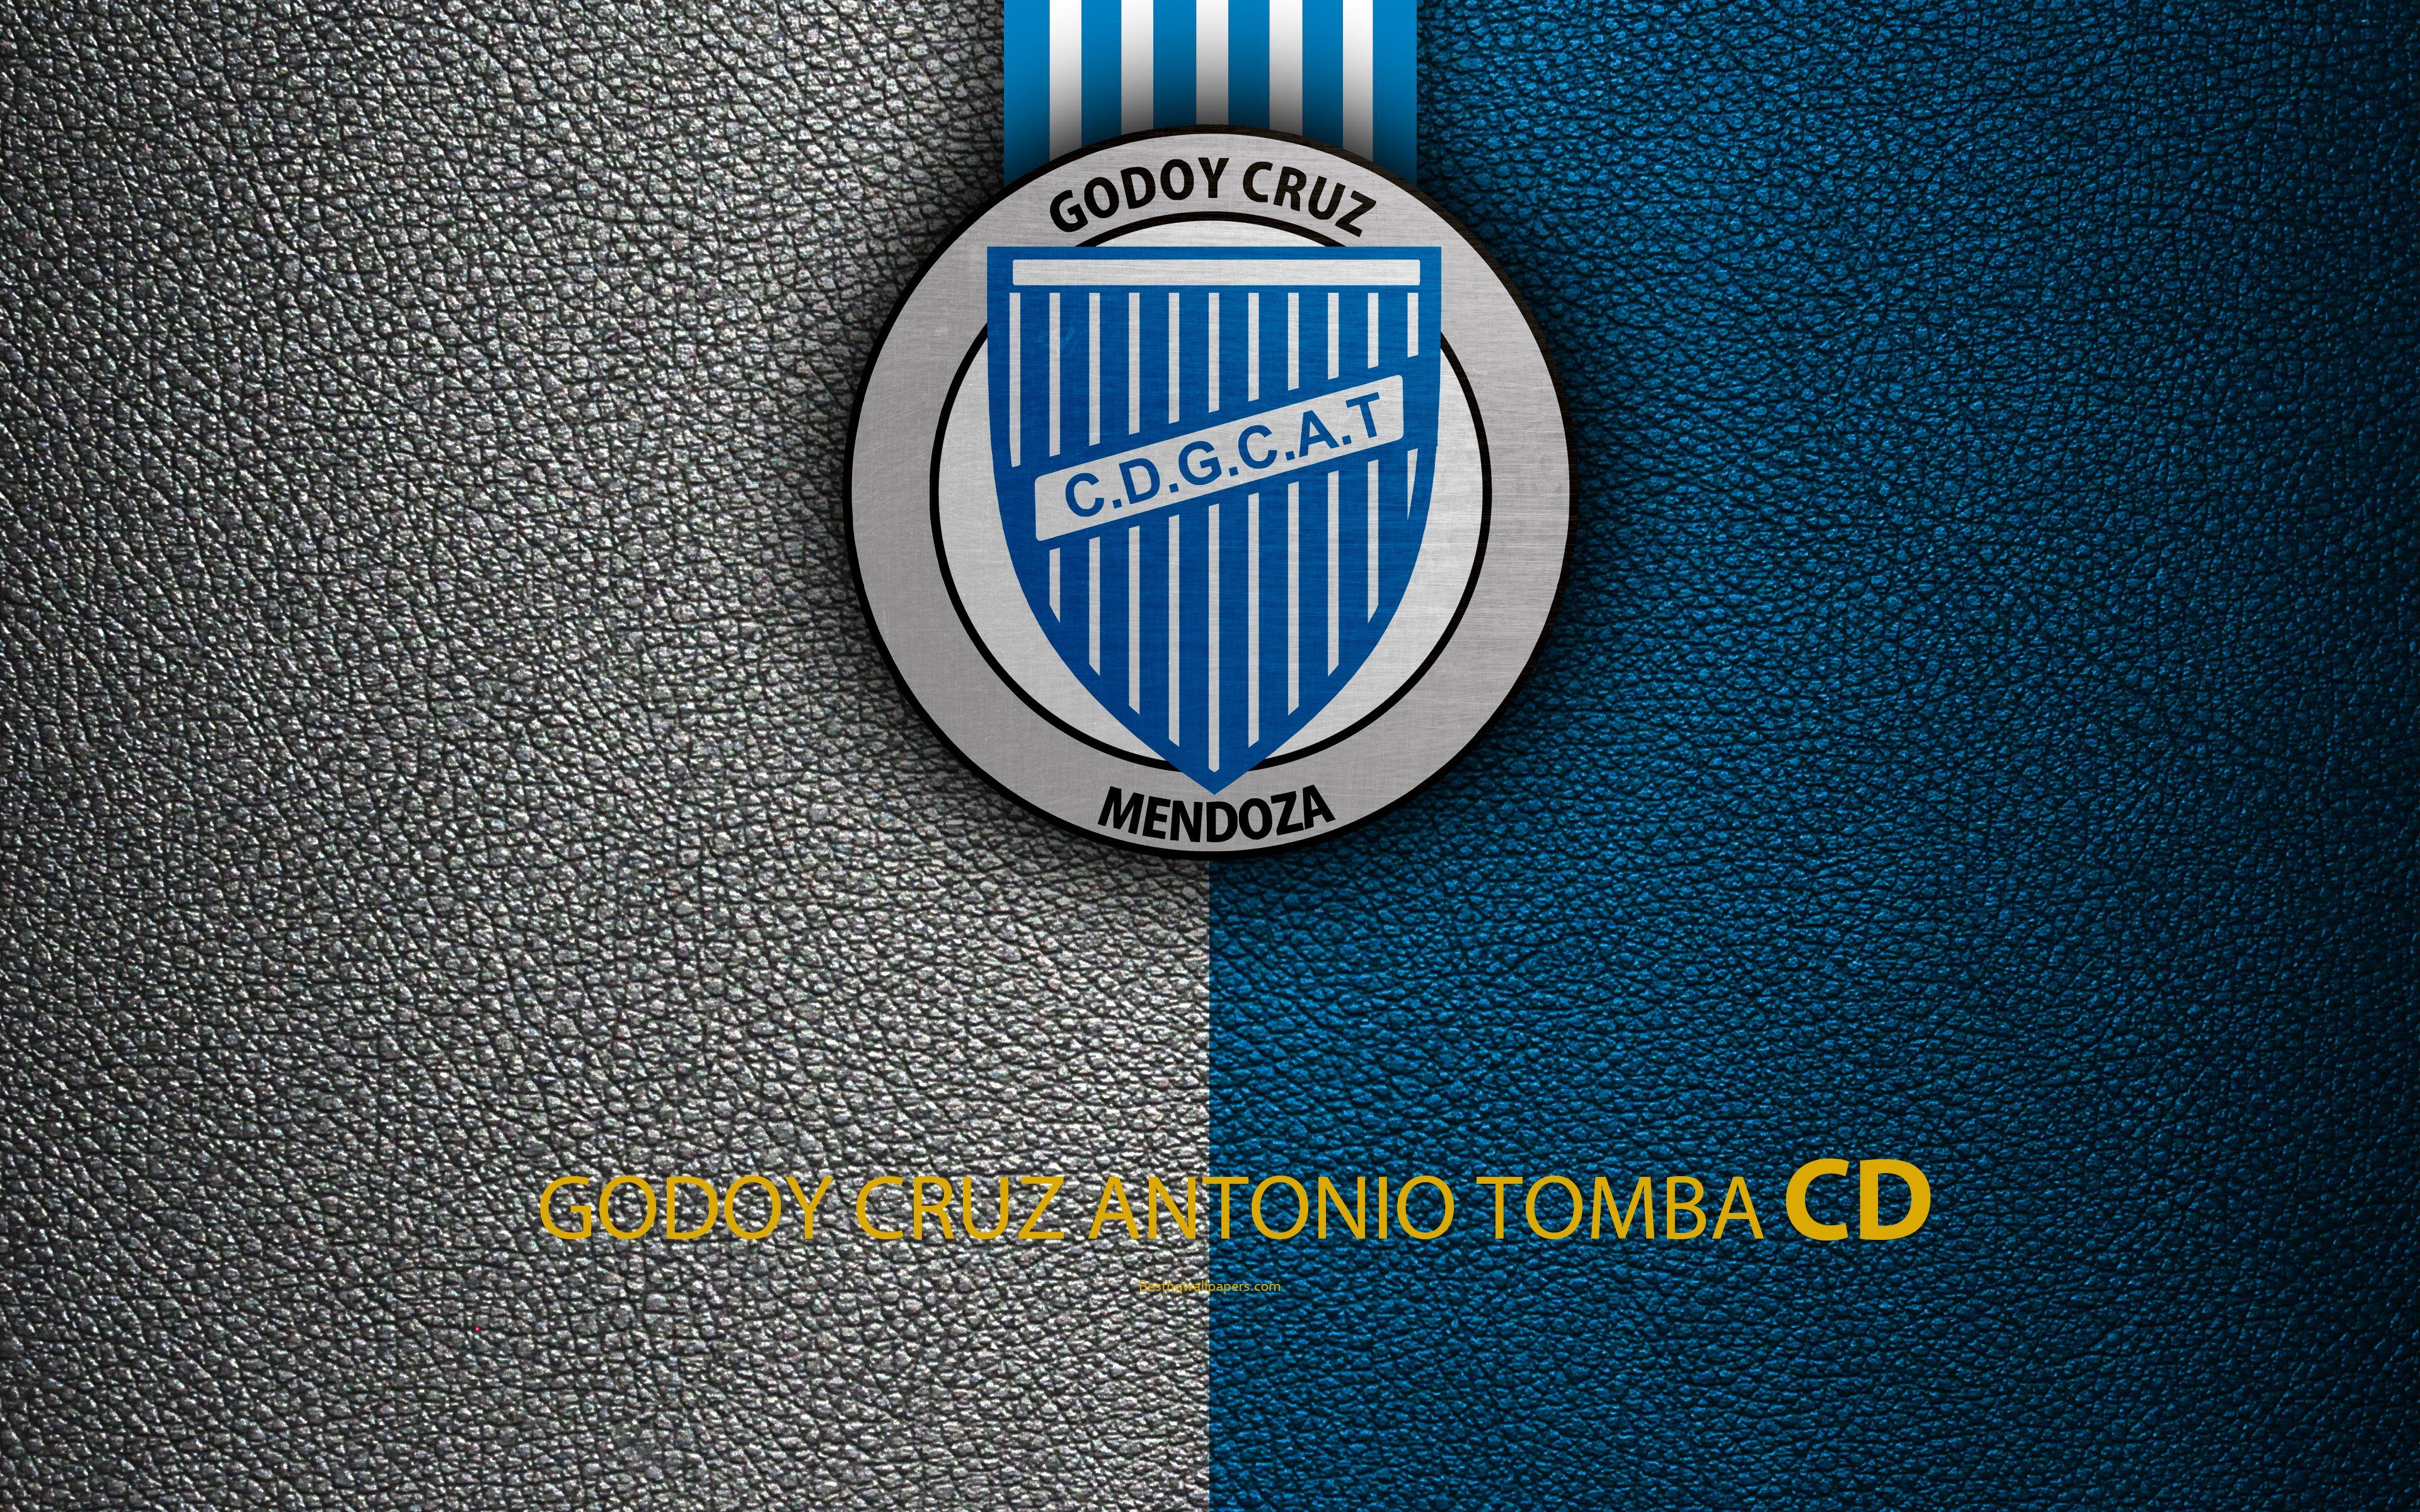 Download wallpaper Godoy Cruz Antonio Tomba, 4k, logo, Argentina